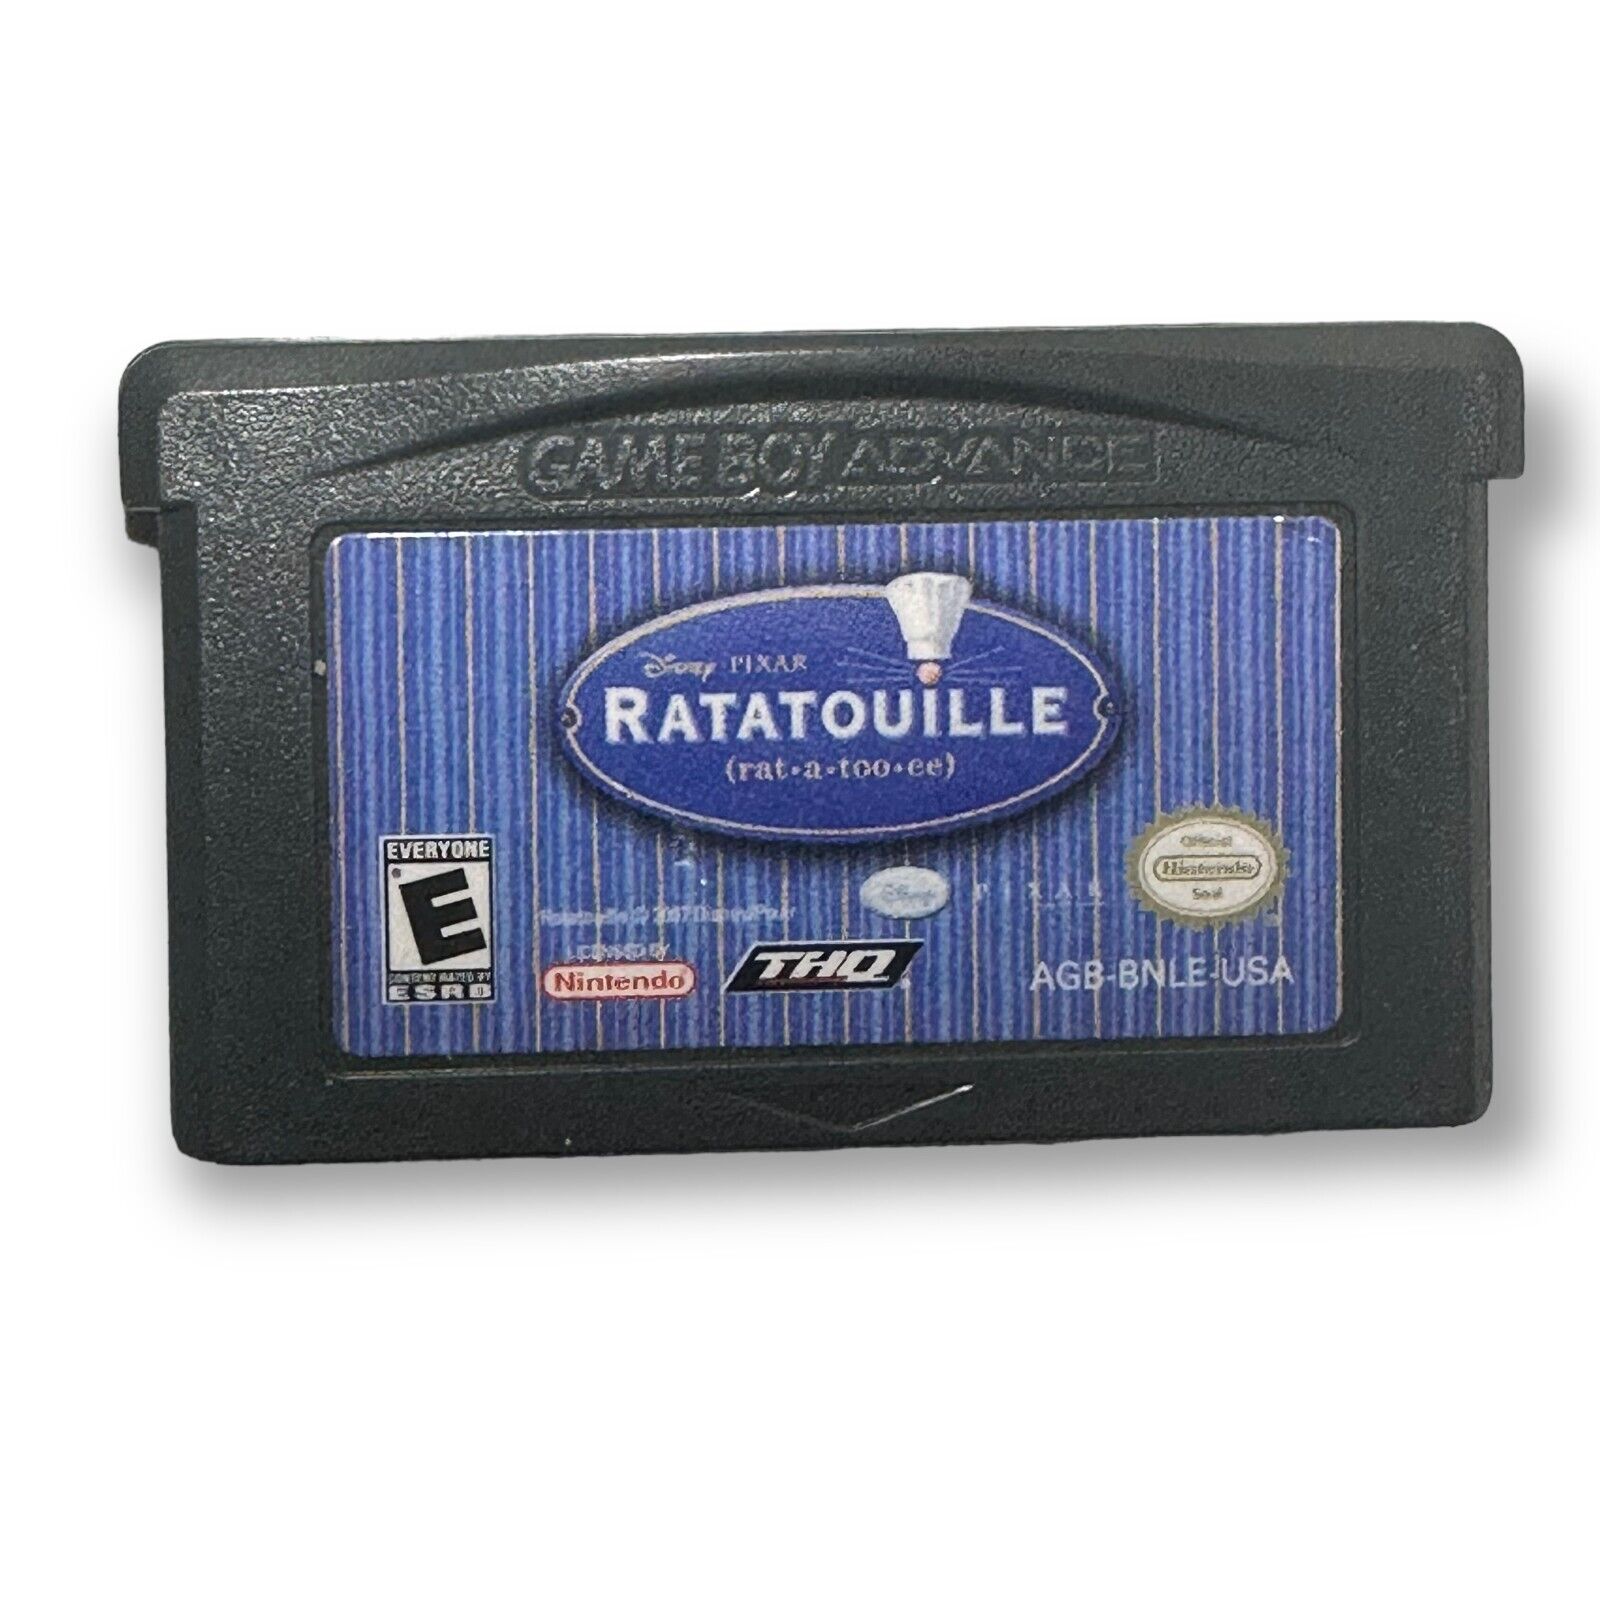 Ratatouille (Nintendo Game Boy Advance, 2007) Cartridge - Tested